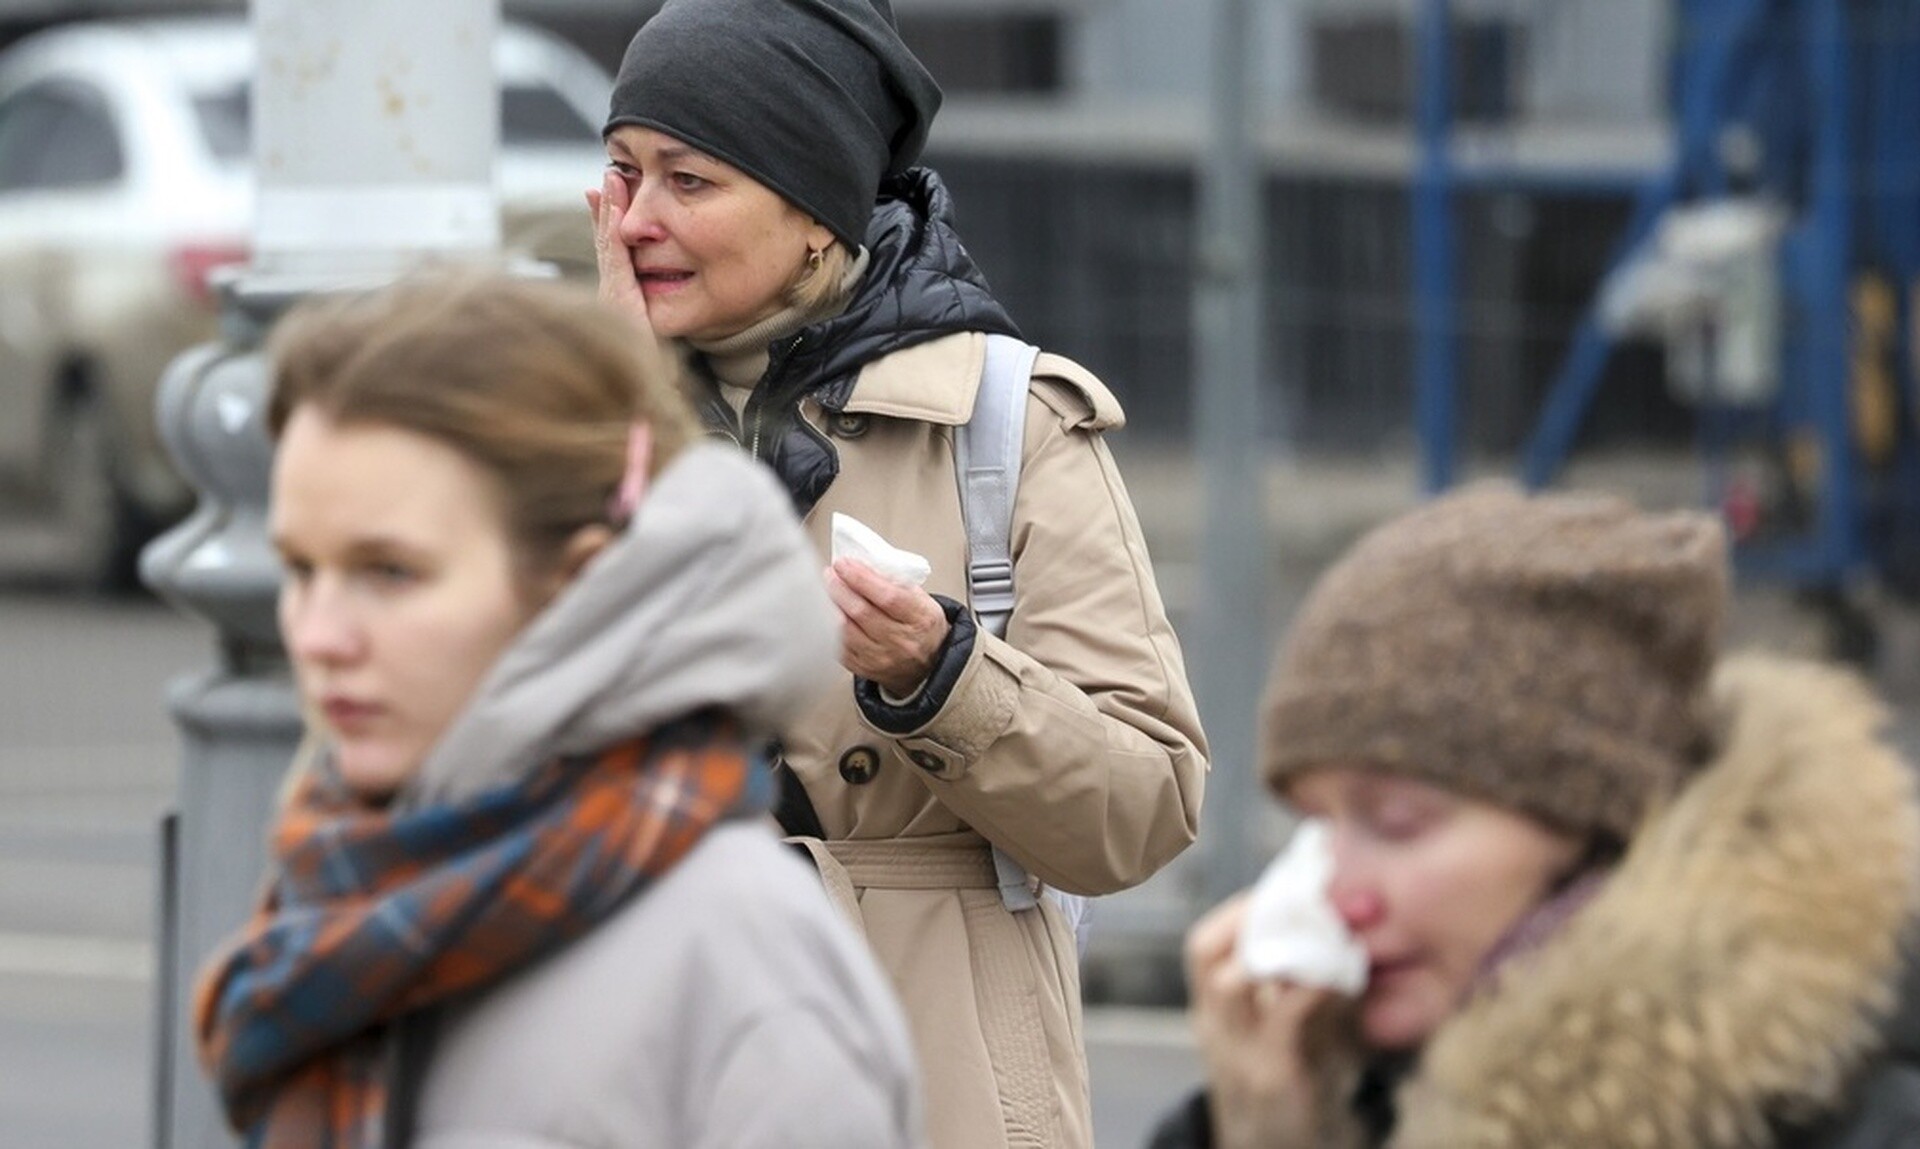 Mόσχα: Σκηνές φρίκης περιγράφουν αυτόπτες μάρτυρες - «Νομίζαμε ότι είναι ειδικά εφέ»